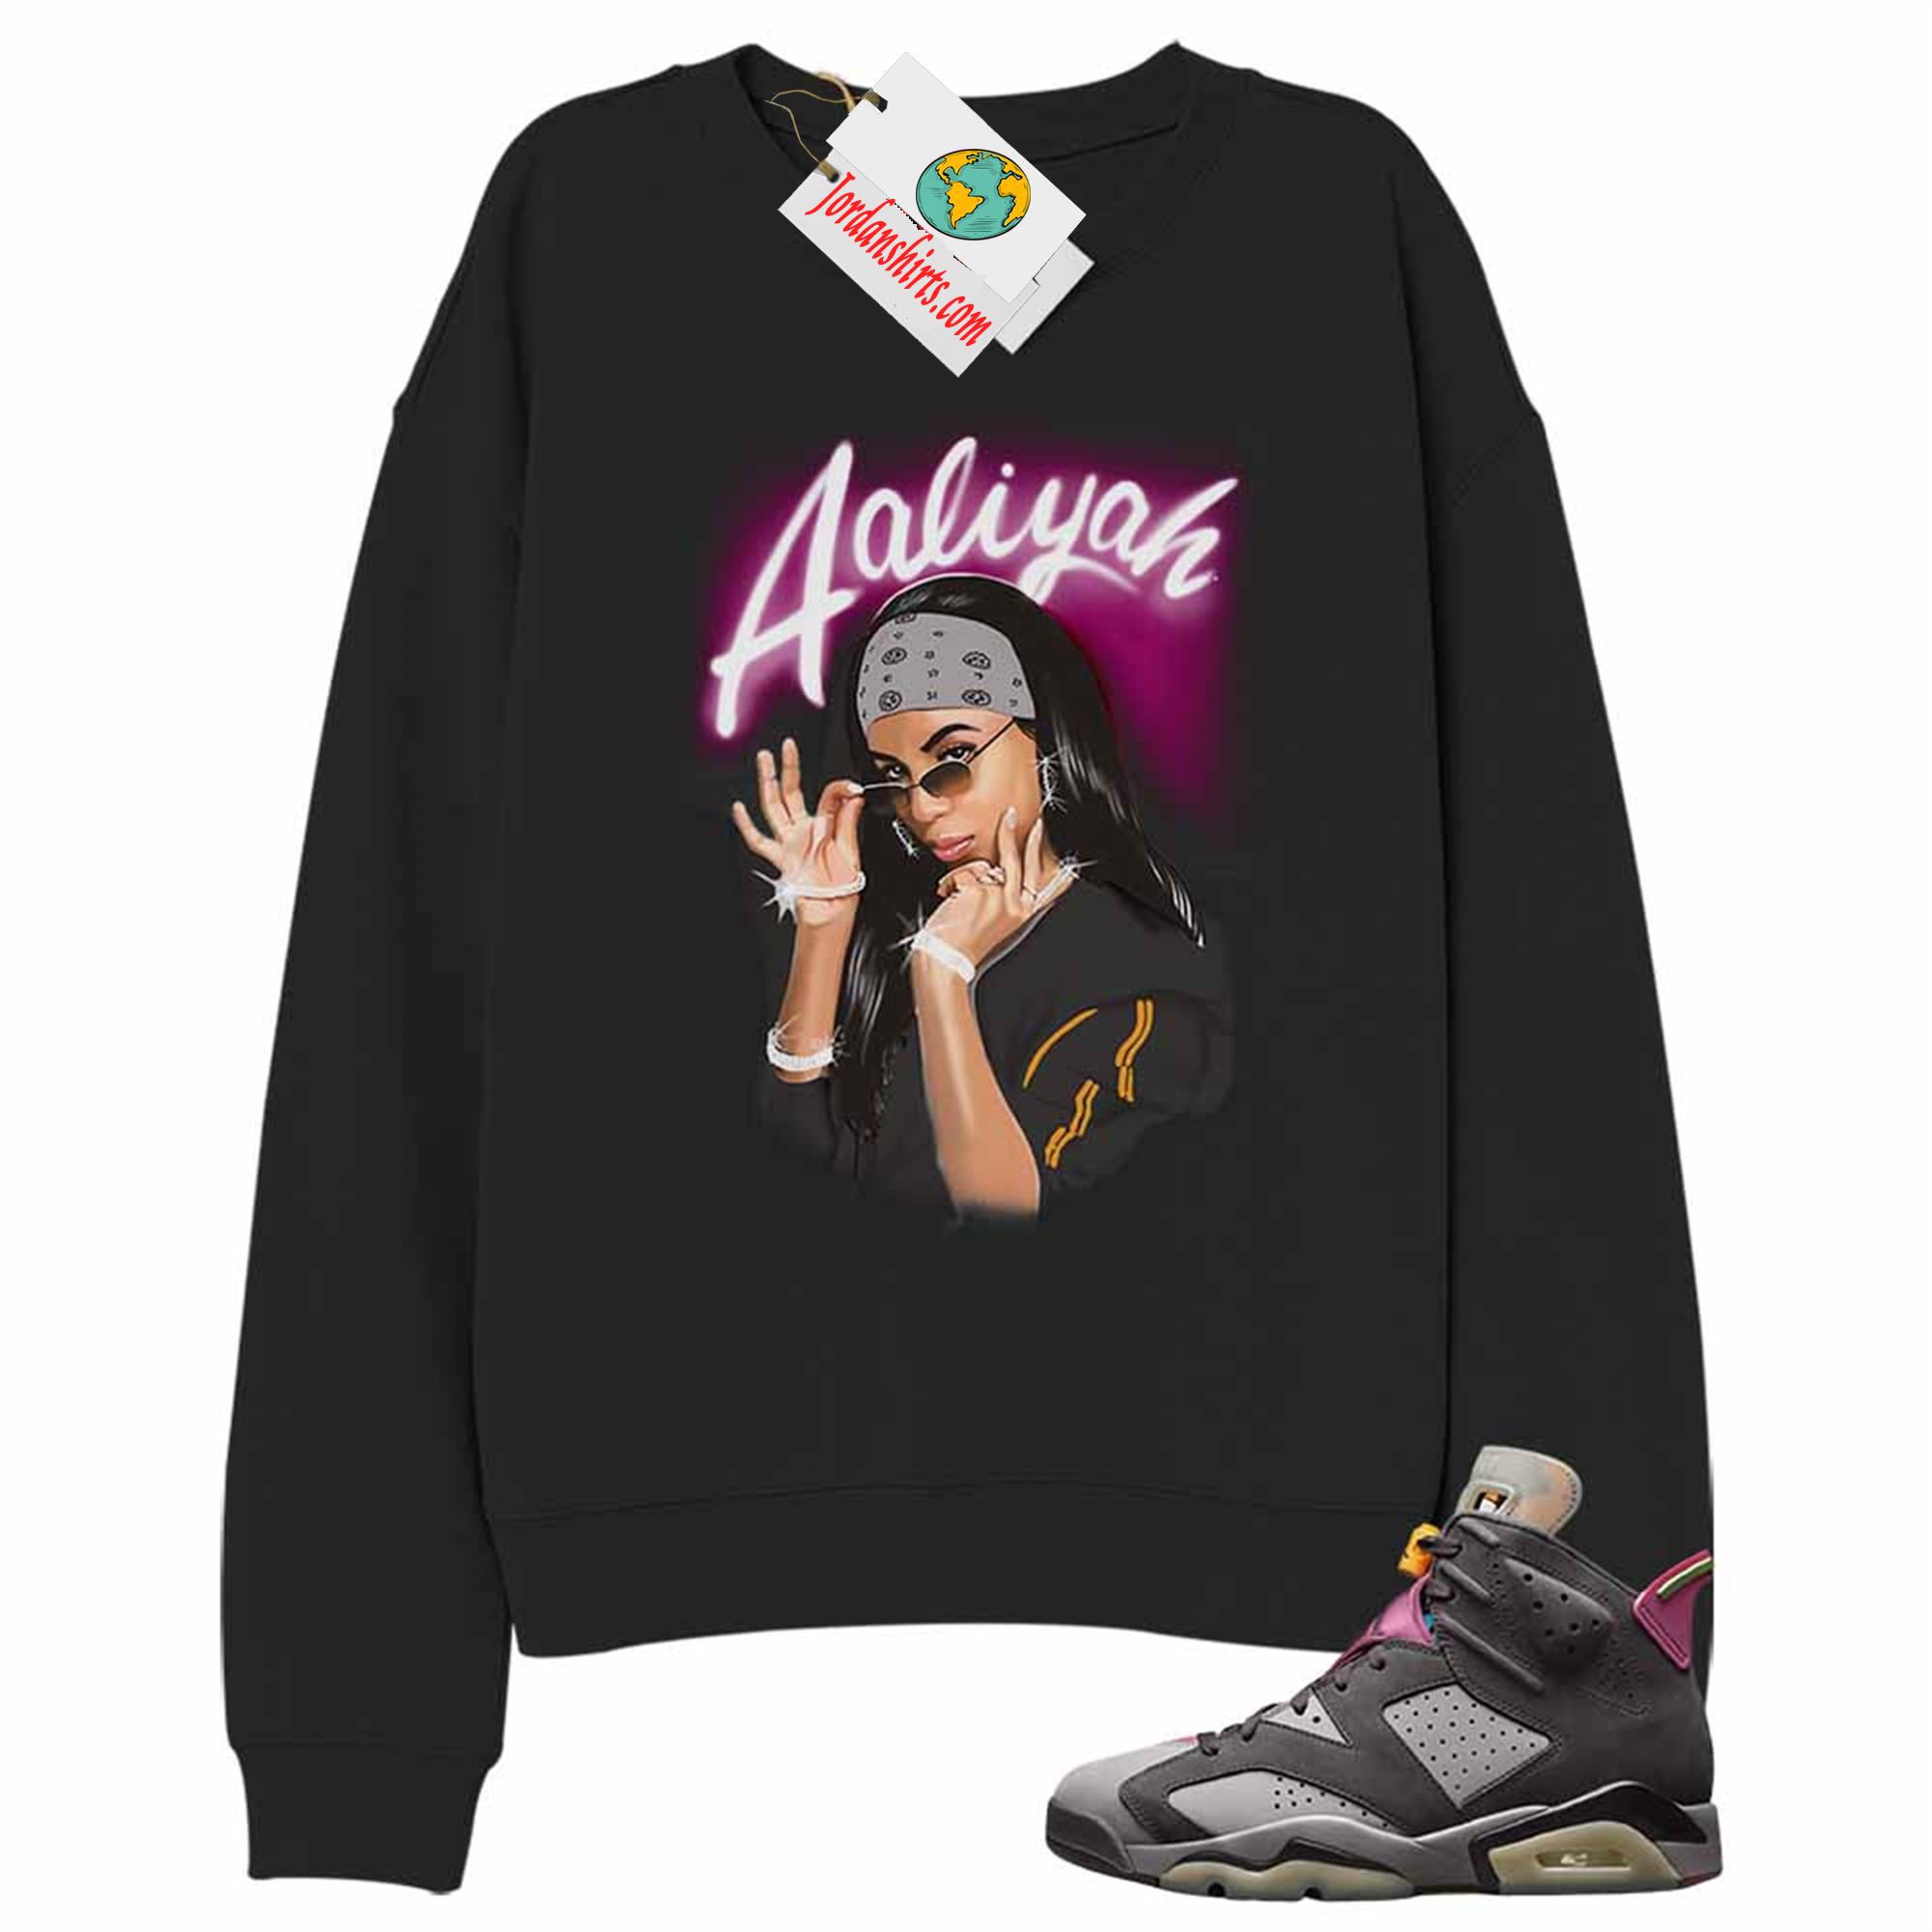 Jordan 6 Sweatshirt, Aaliyah Airbrush Black Sweatshirt Air Jordan 6 Bordeaux 6s Full Size Up To 5xl